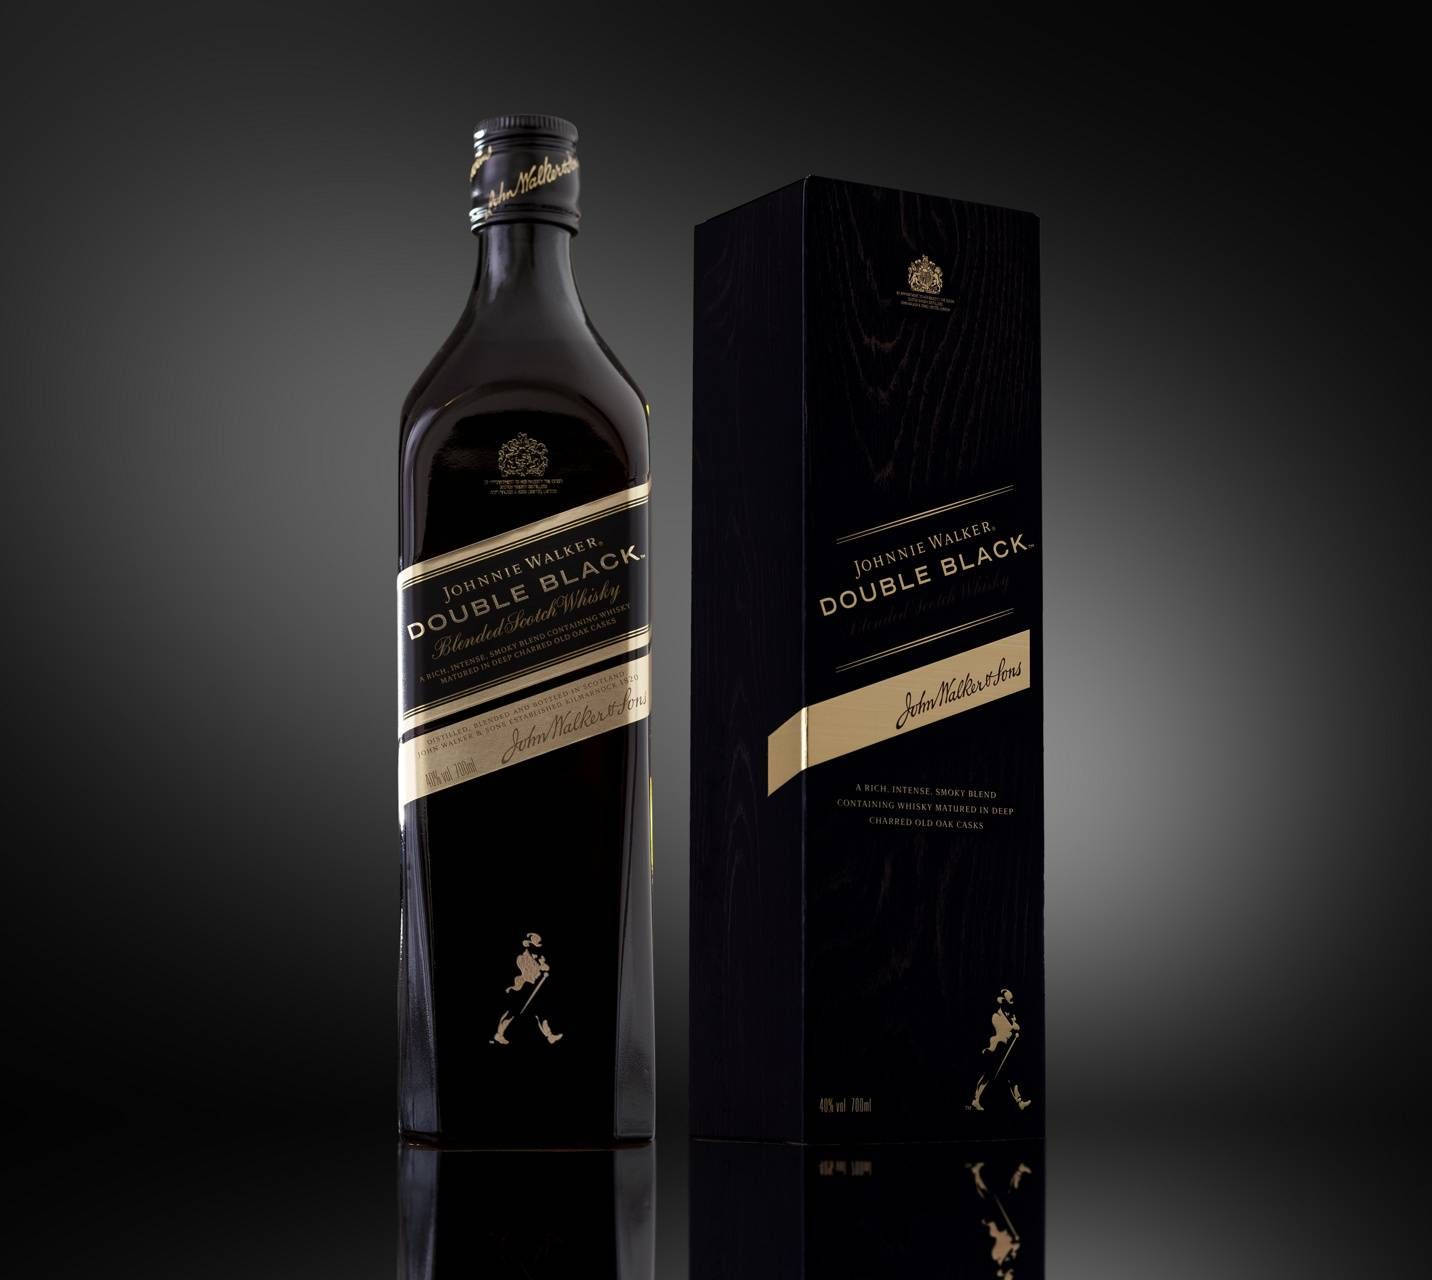 Caption: Exquisite Bottle of Johnnie Walker Double Black Scotch Whisky Wallpaper